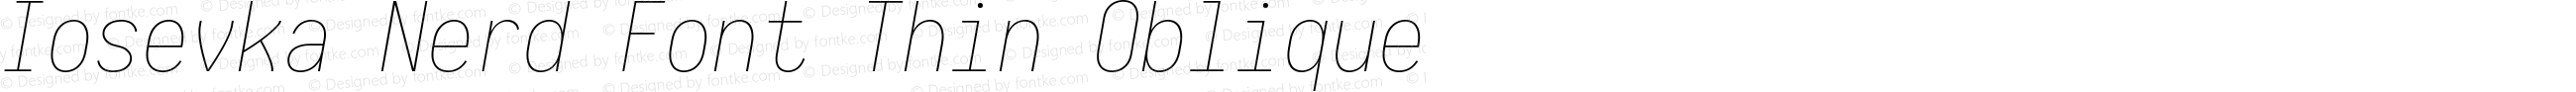 Iosevka Thin Oblique Nerd Font Complete